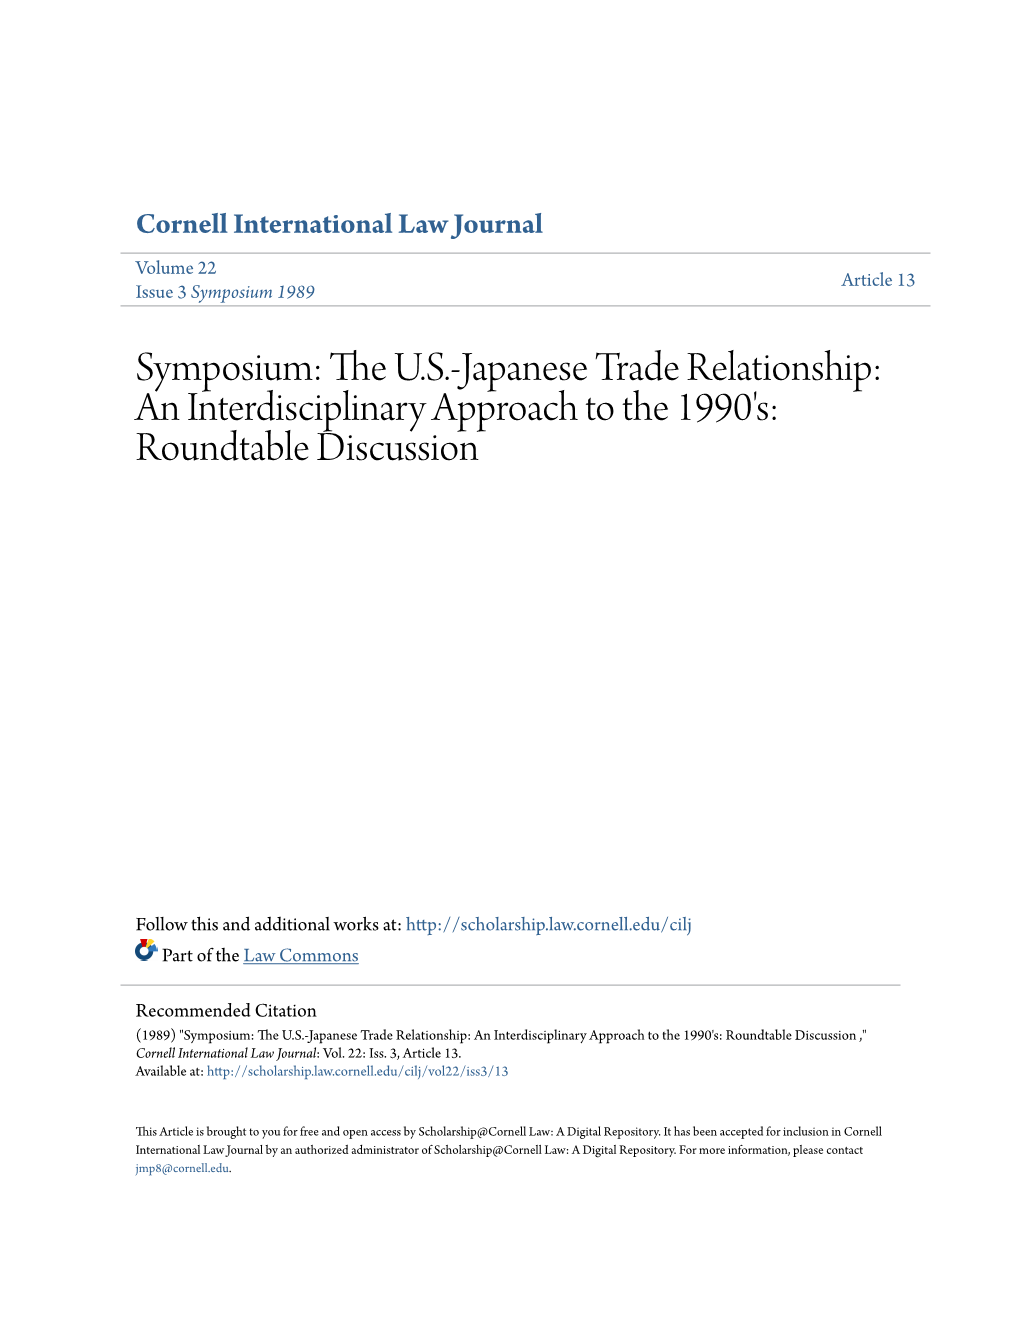 Symposium: the U.S.-Japanese Trade